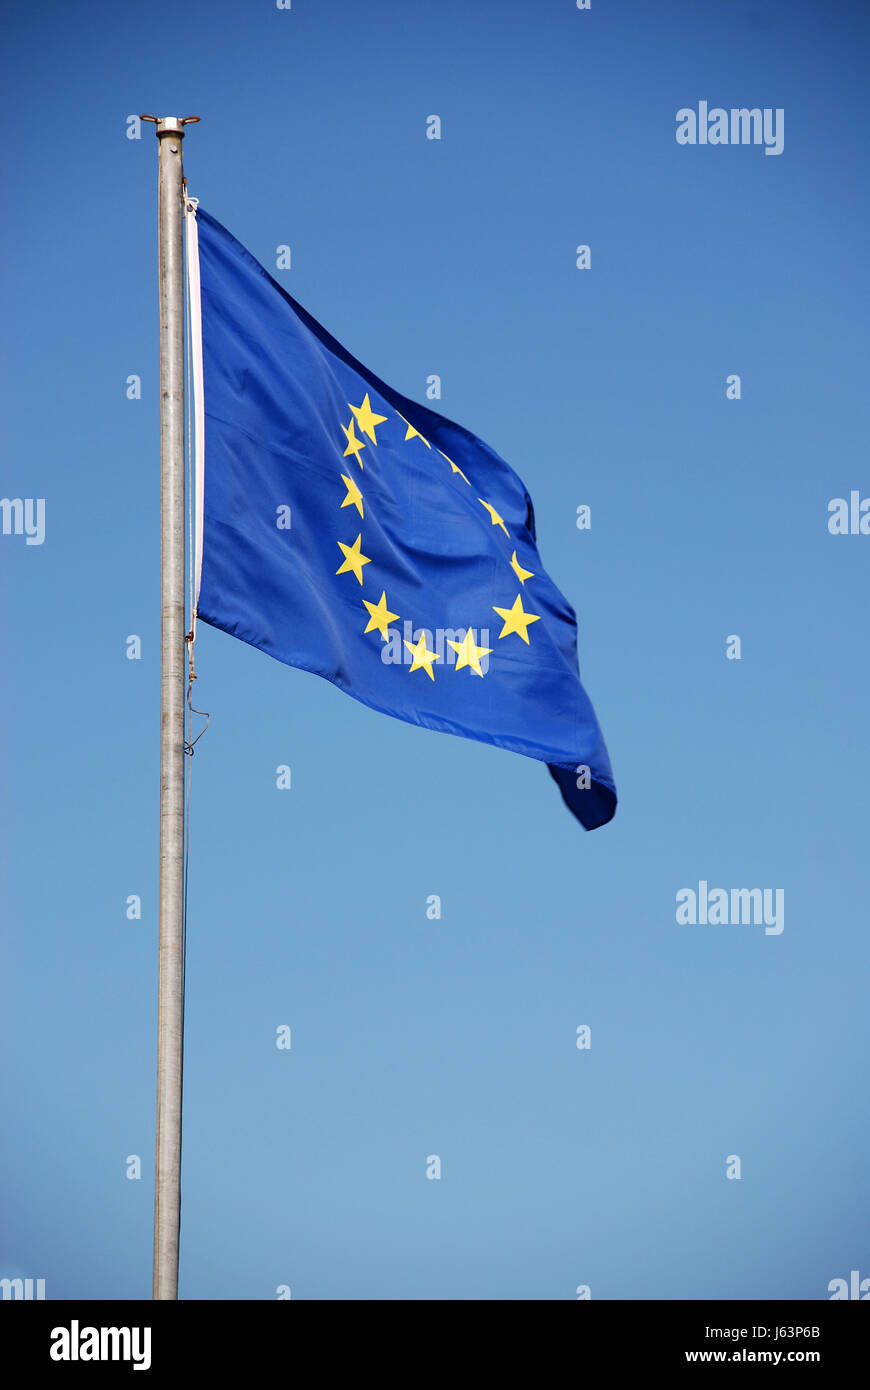 Europa bandiera europa simbolico bandiere bandiera bar flagstaff stelle asterischi asterisco Foto Stock